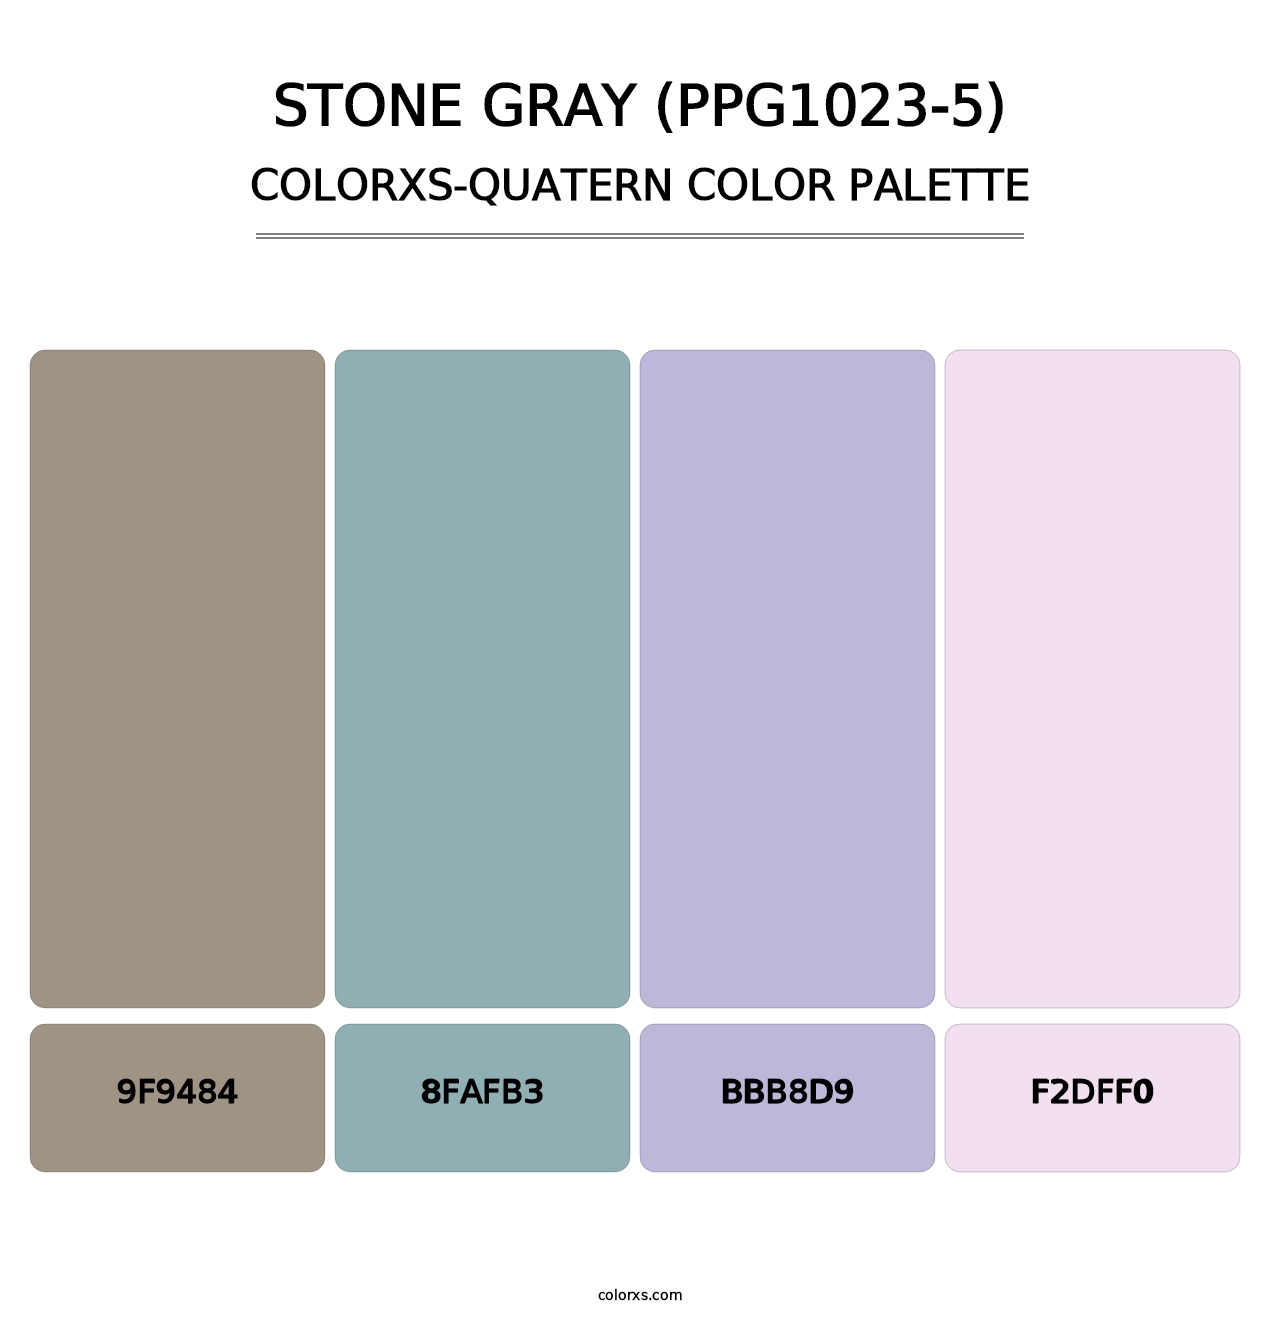 Stone Gray (PPG1023-5) - Colorxs Quatern Palette